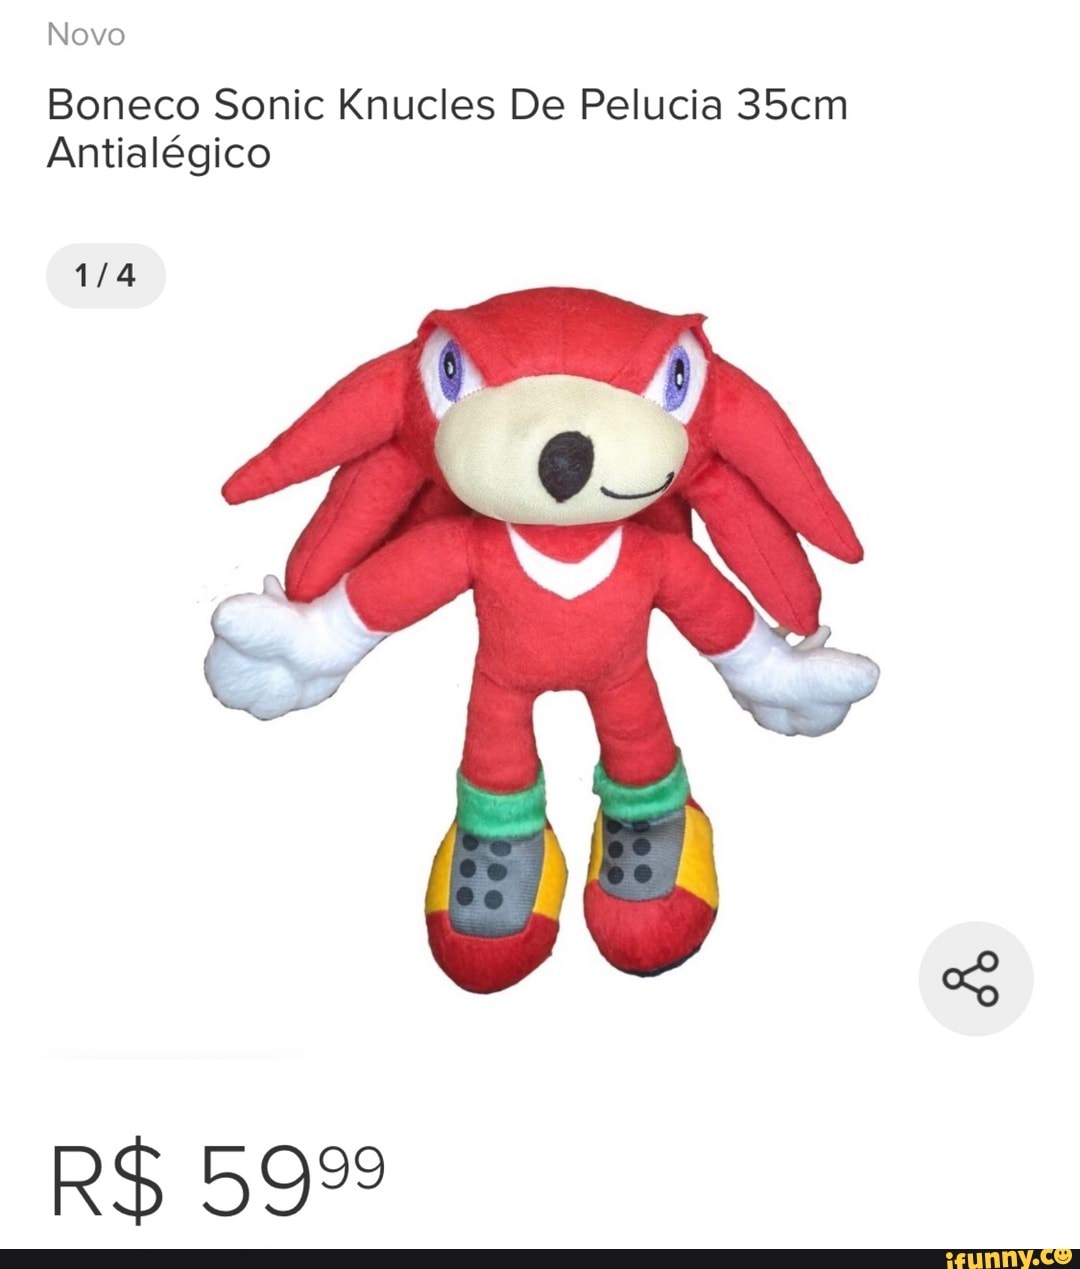 Novo Boneco Sonic Knucles De Pelucia 35cm Antialégico R$ - iFunny Brazil